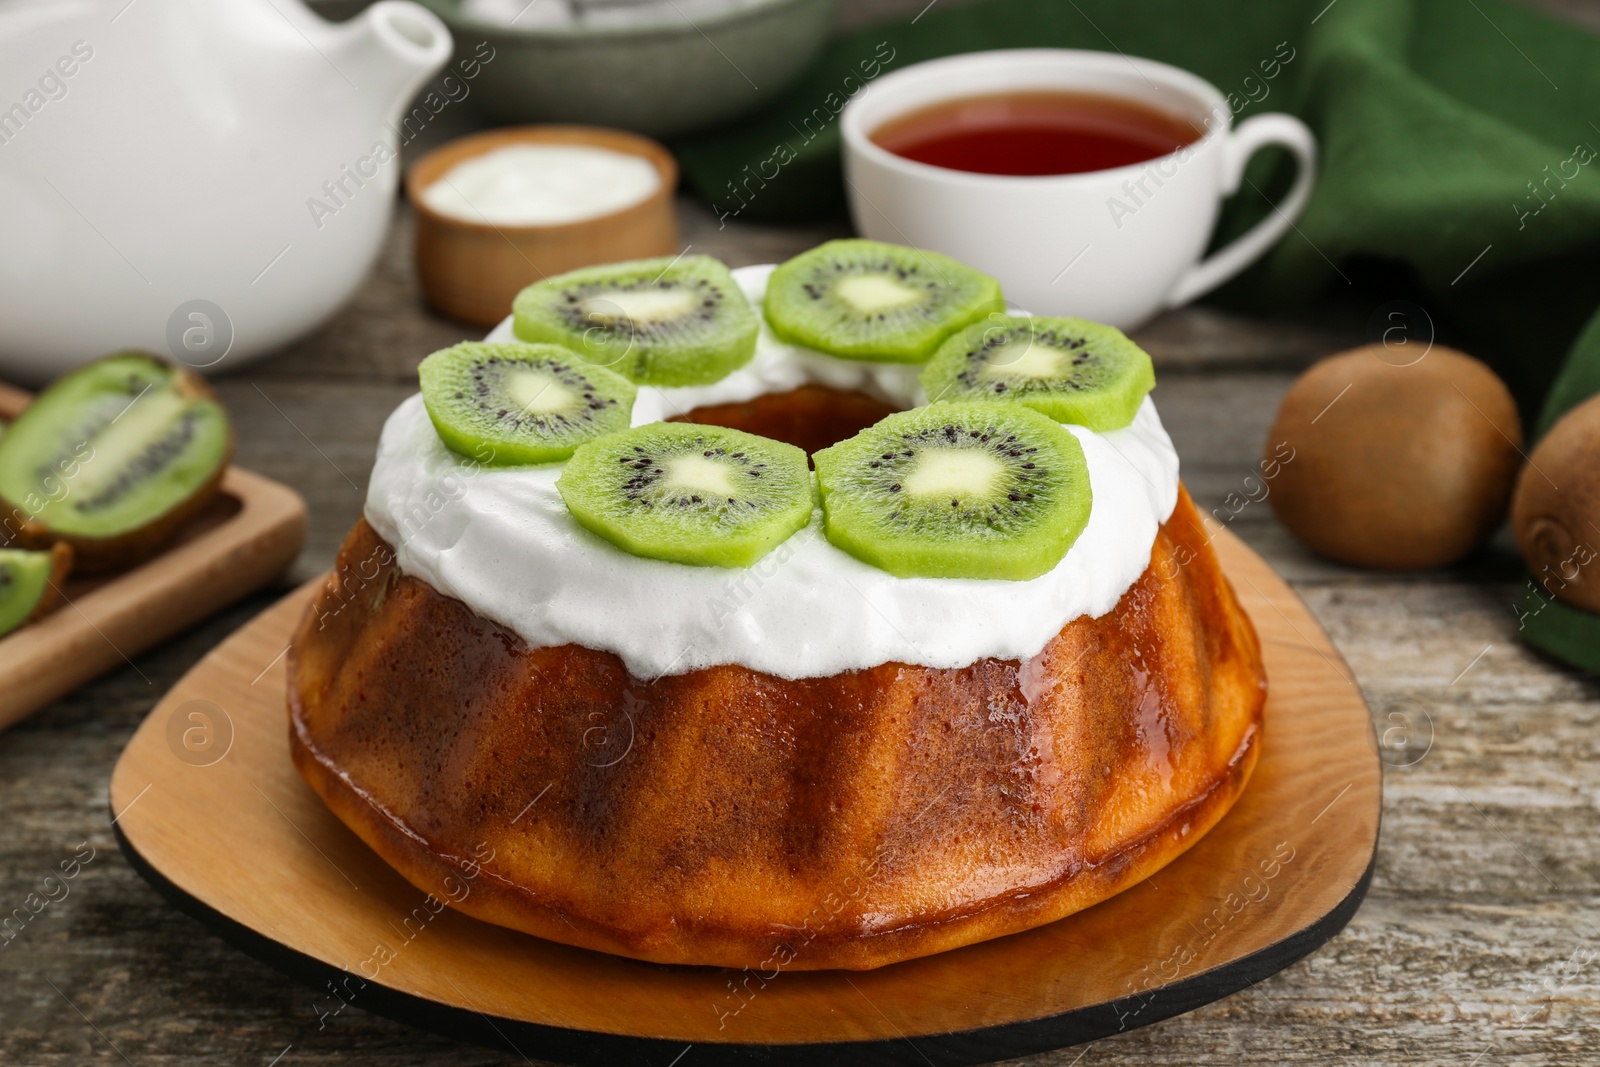 Photo of Homemade yogurt cake with kiwi and cream on wooden table